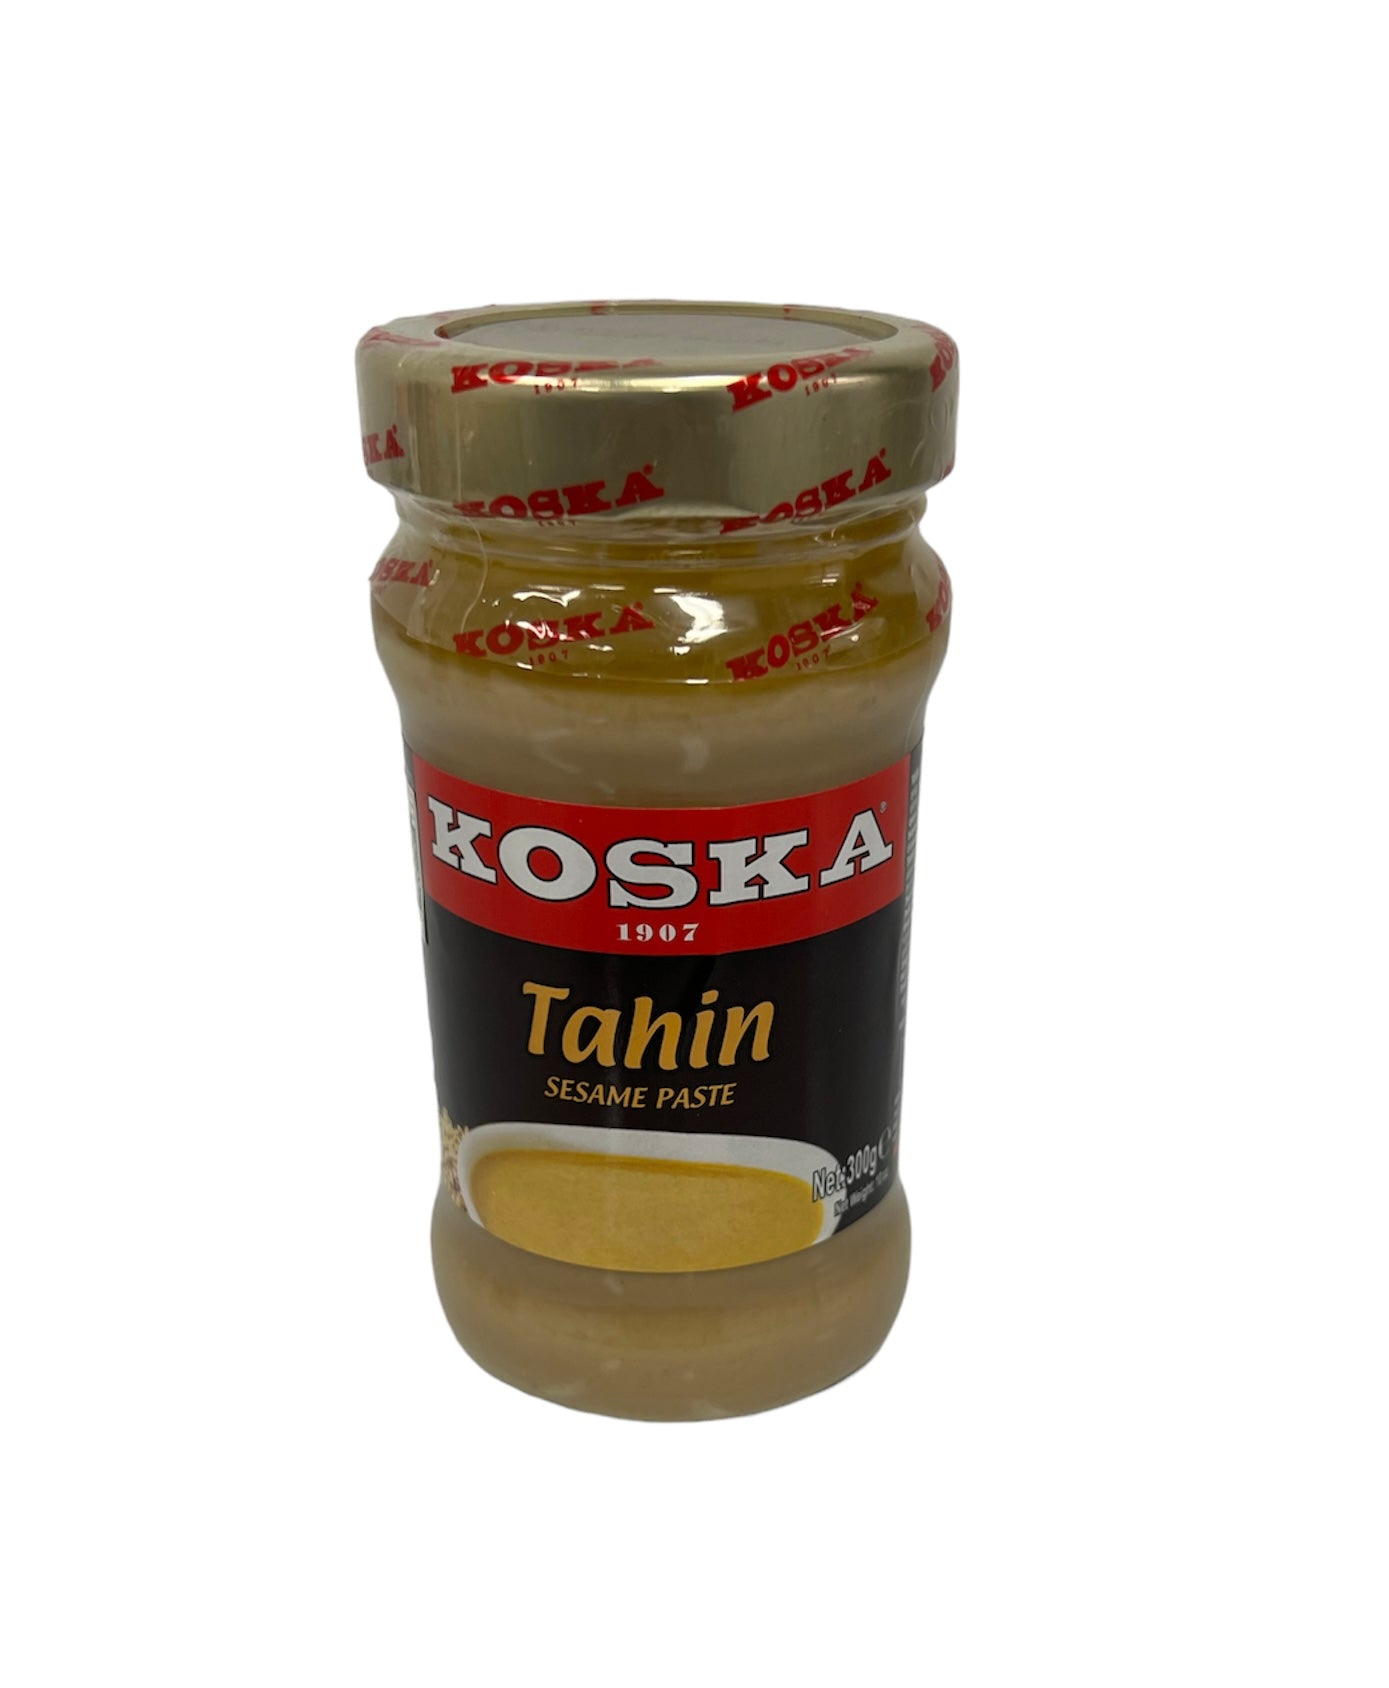  Koska Tahin Tahini 550gr Sesame Paste : Grocery